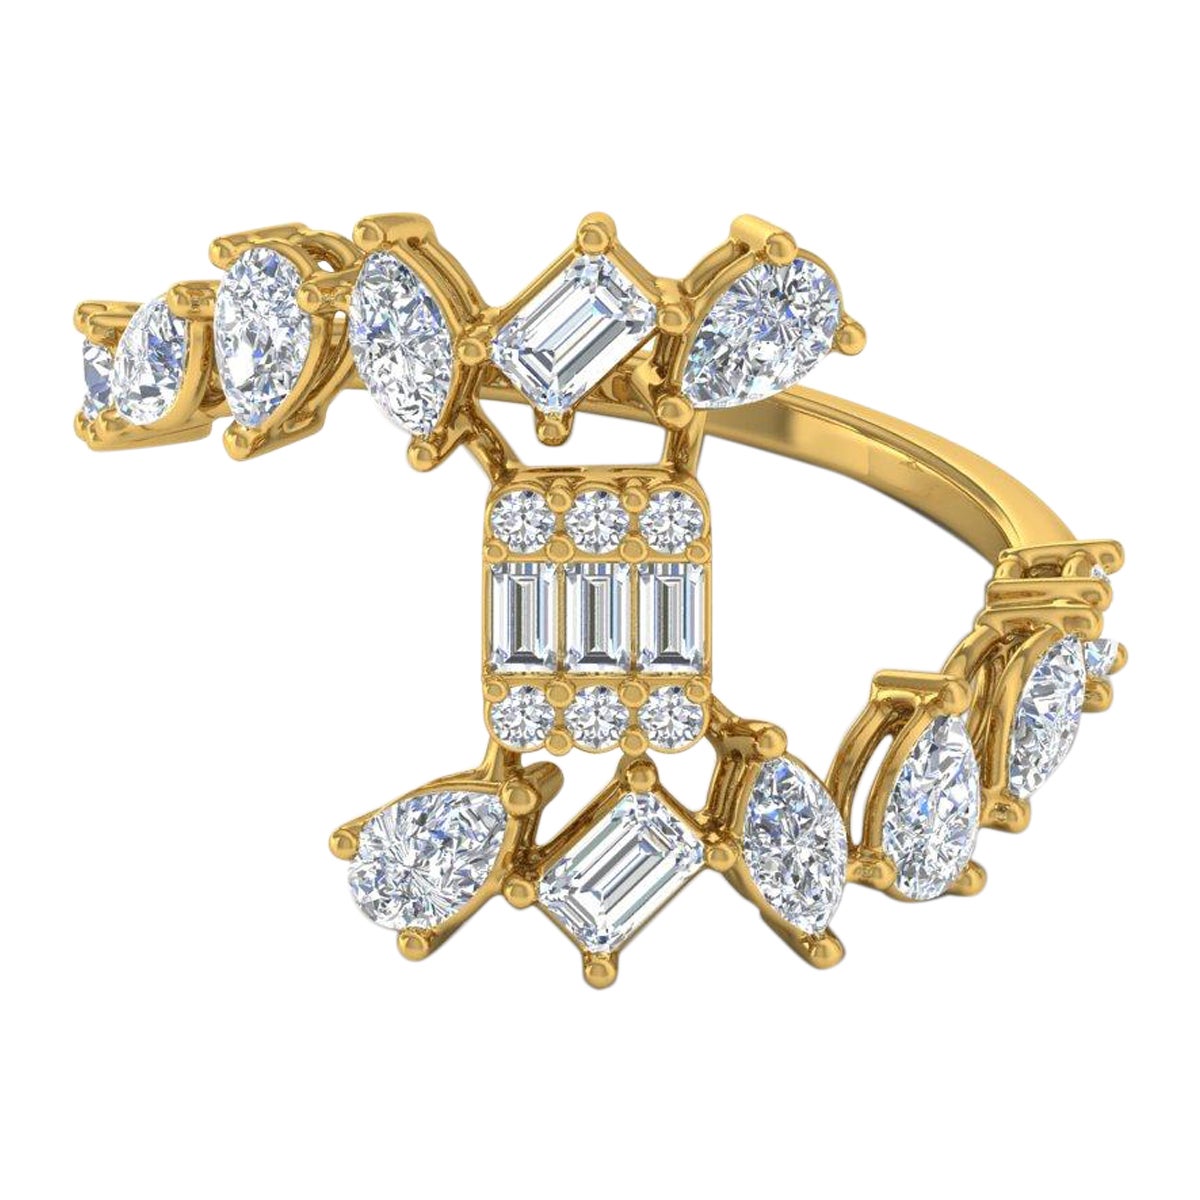 1.6 Carat SI Clarity HI Color Pear Emerald Cut Diamond Ring 18 Karat Yellow Gold For Sale